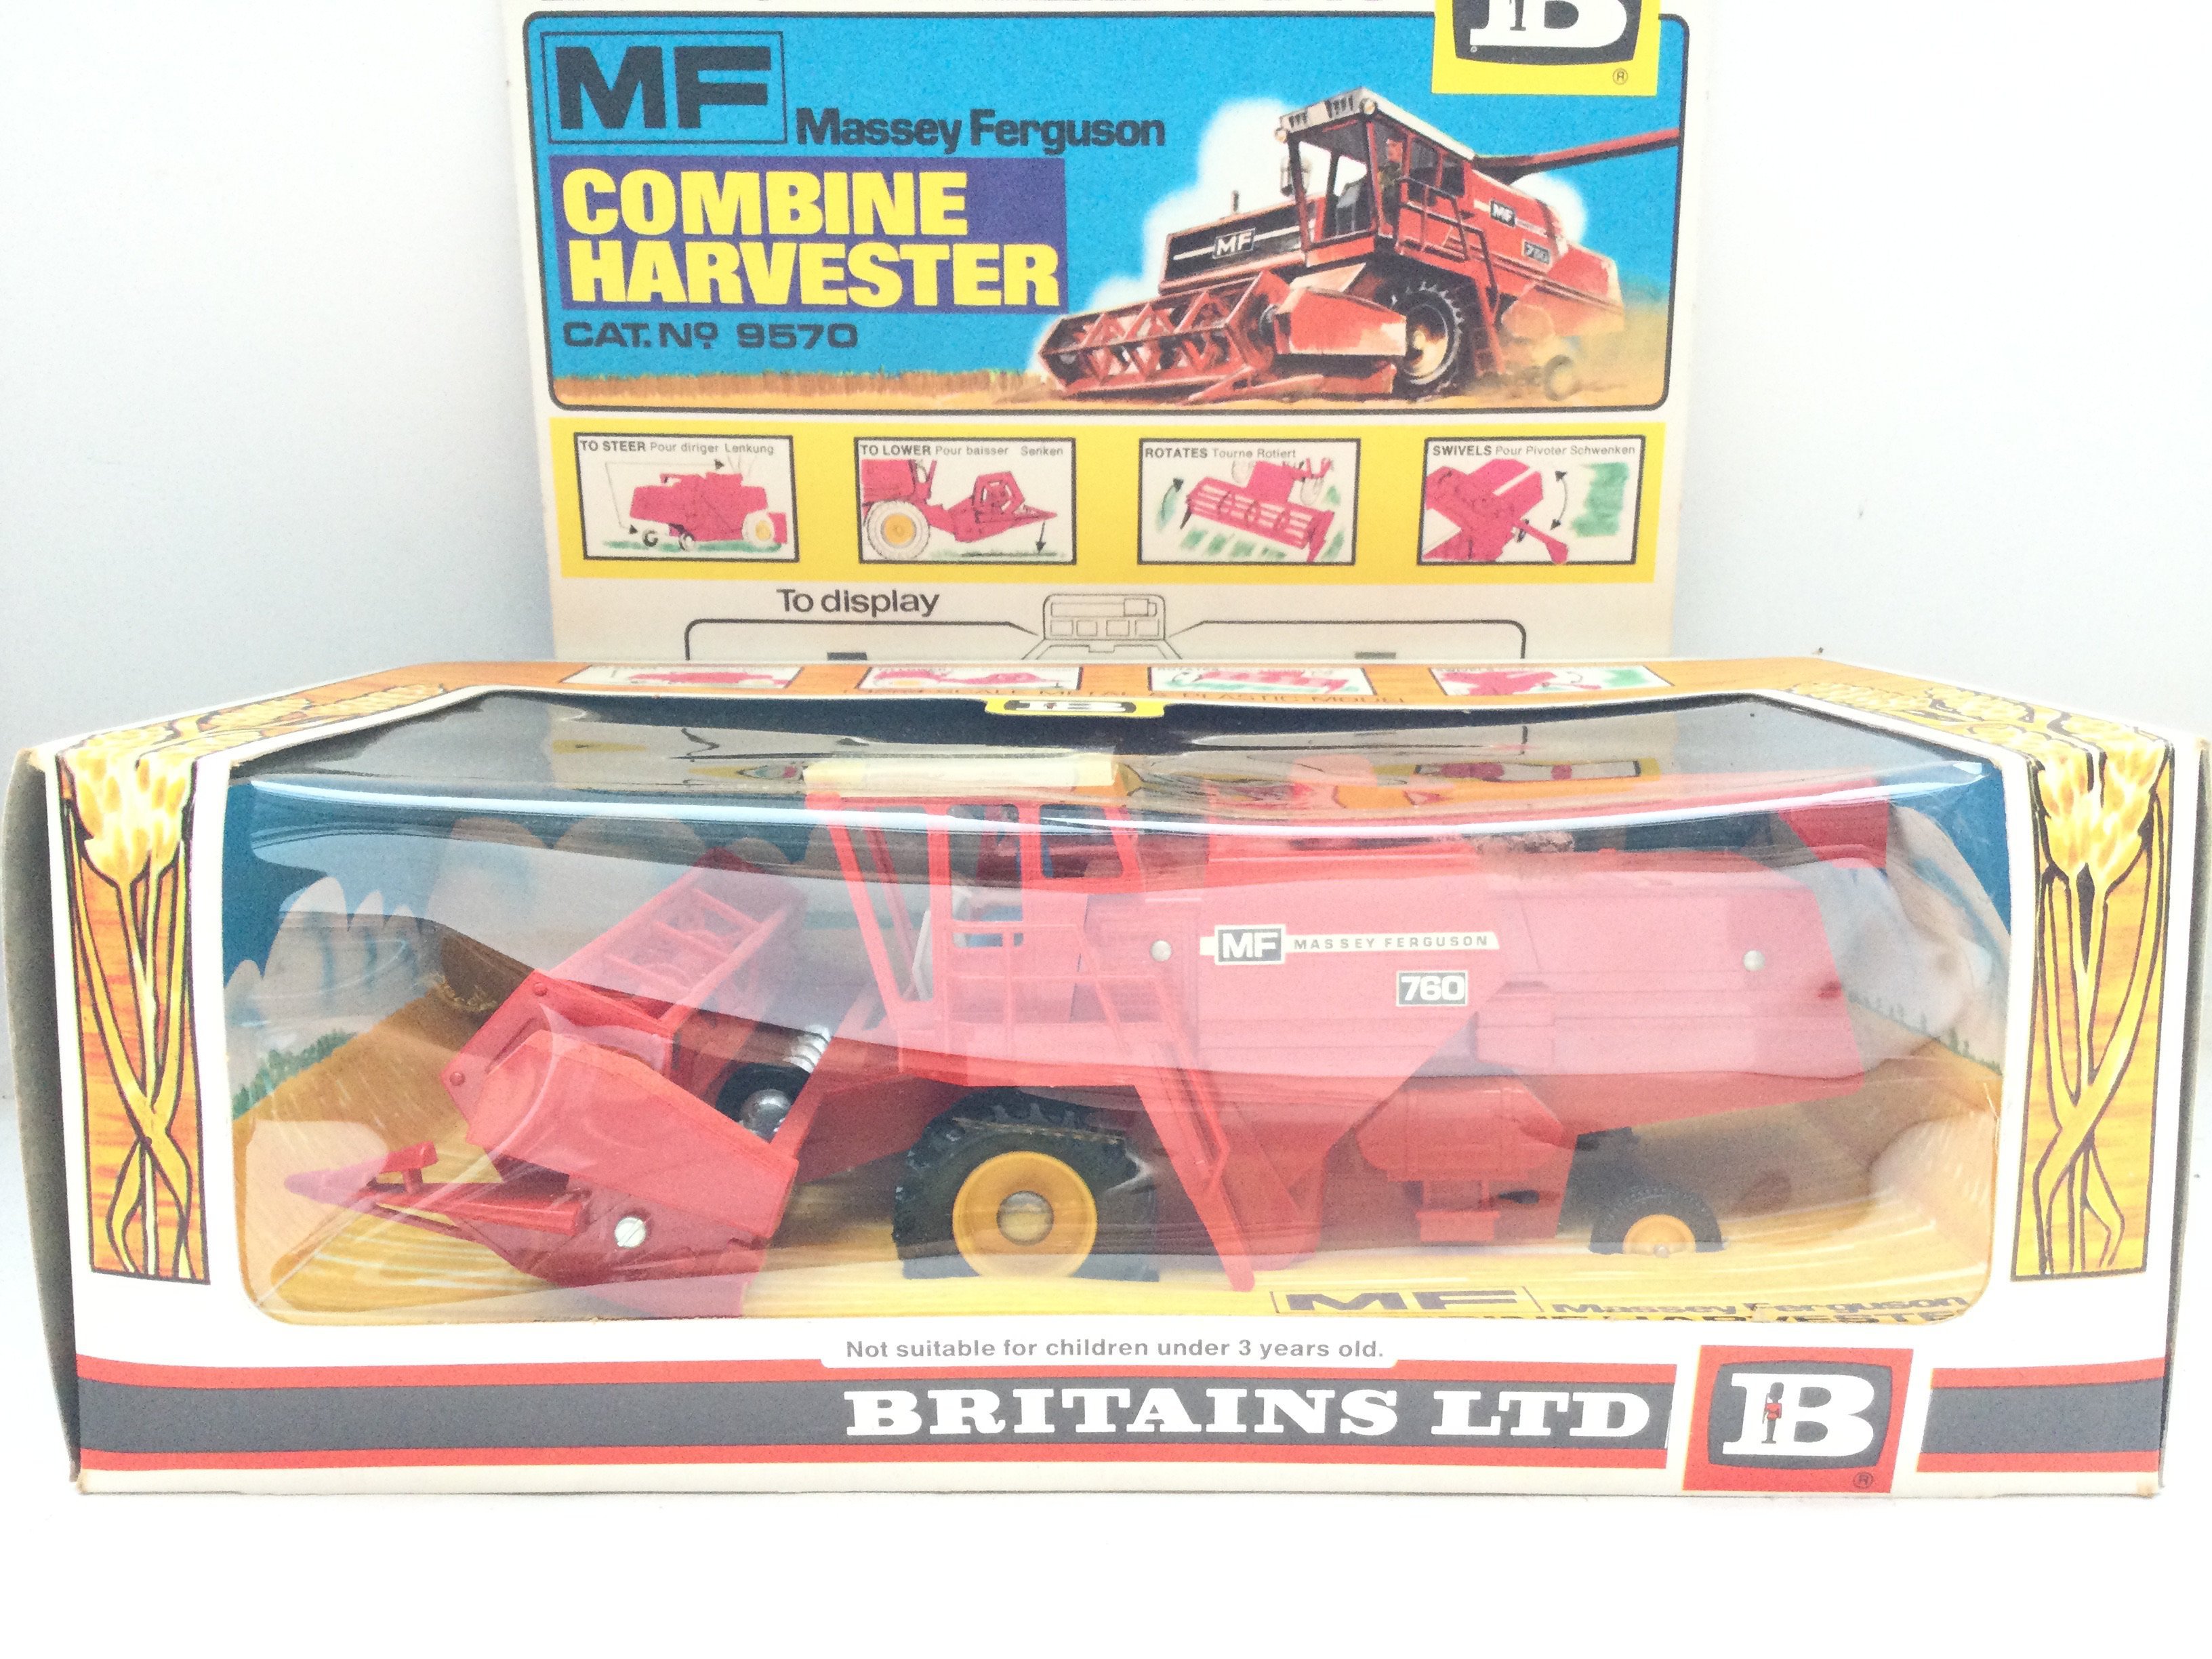 A Boxed Britains Massey Ferguson Combine Harvester